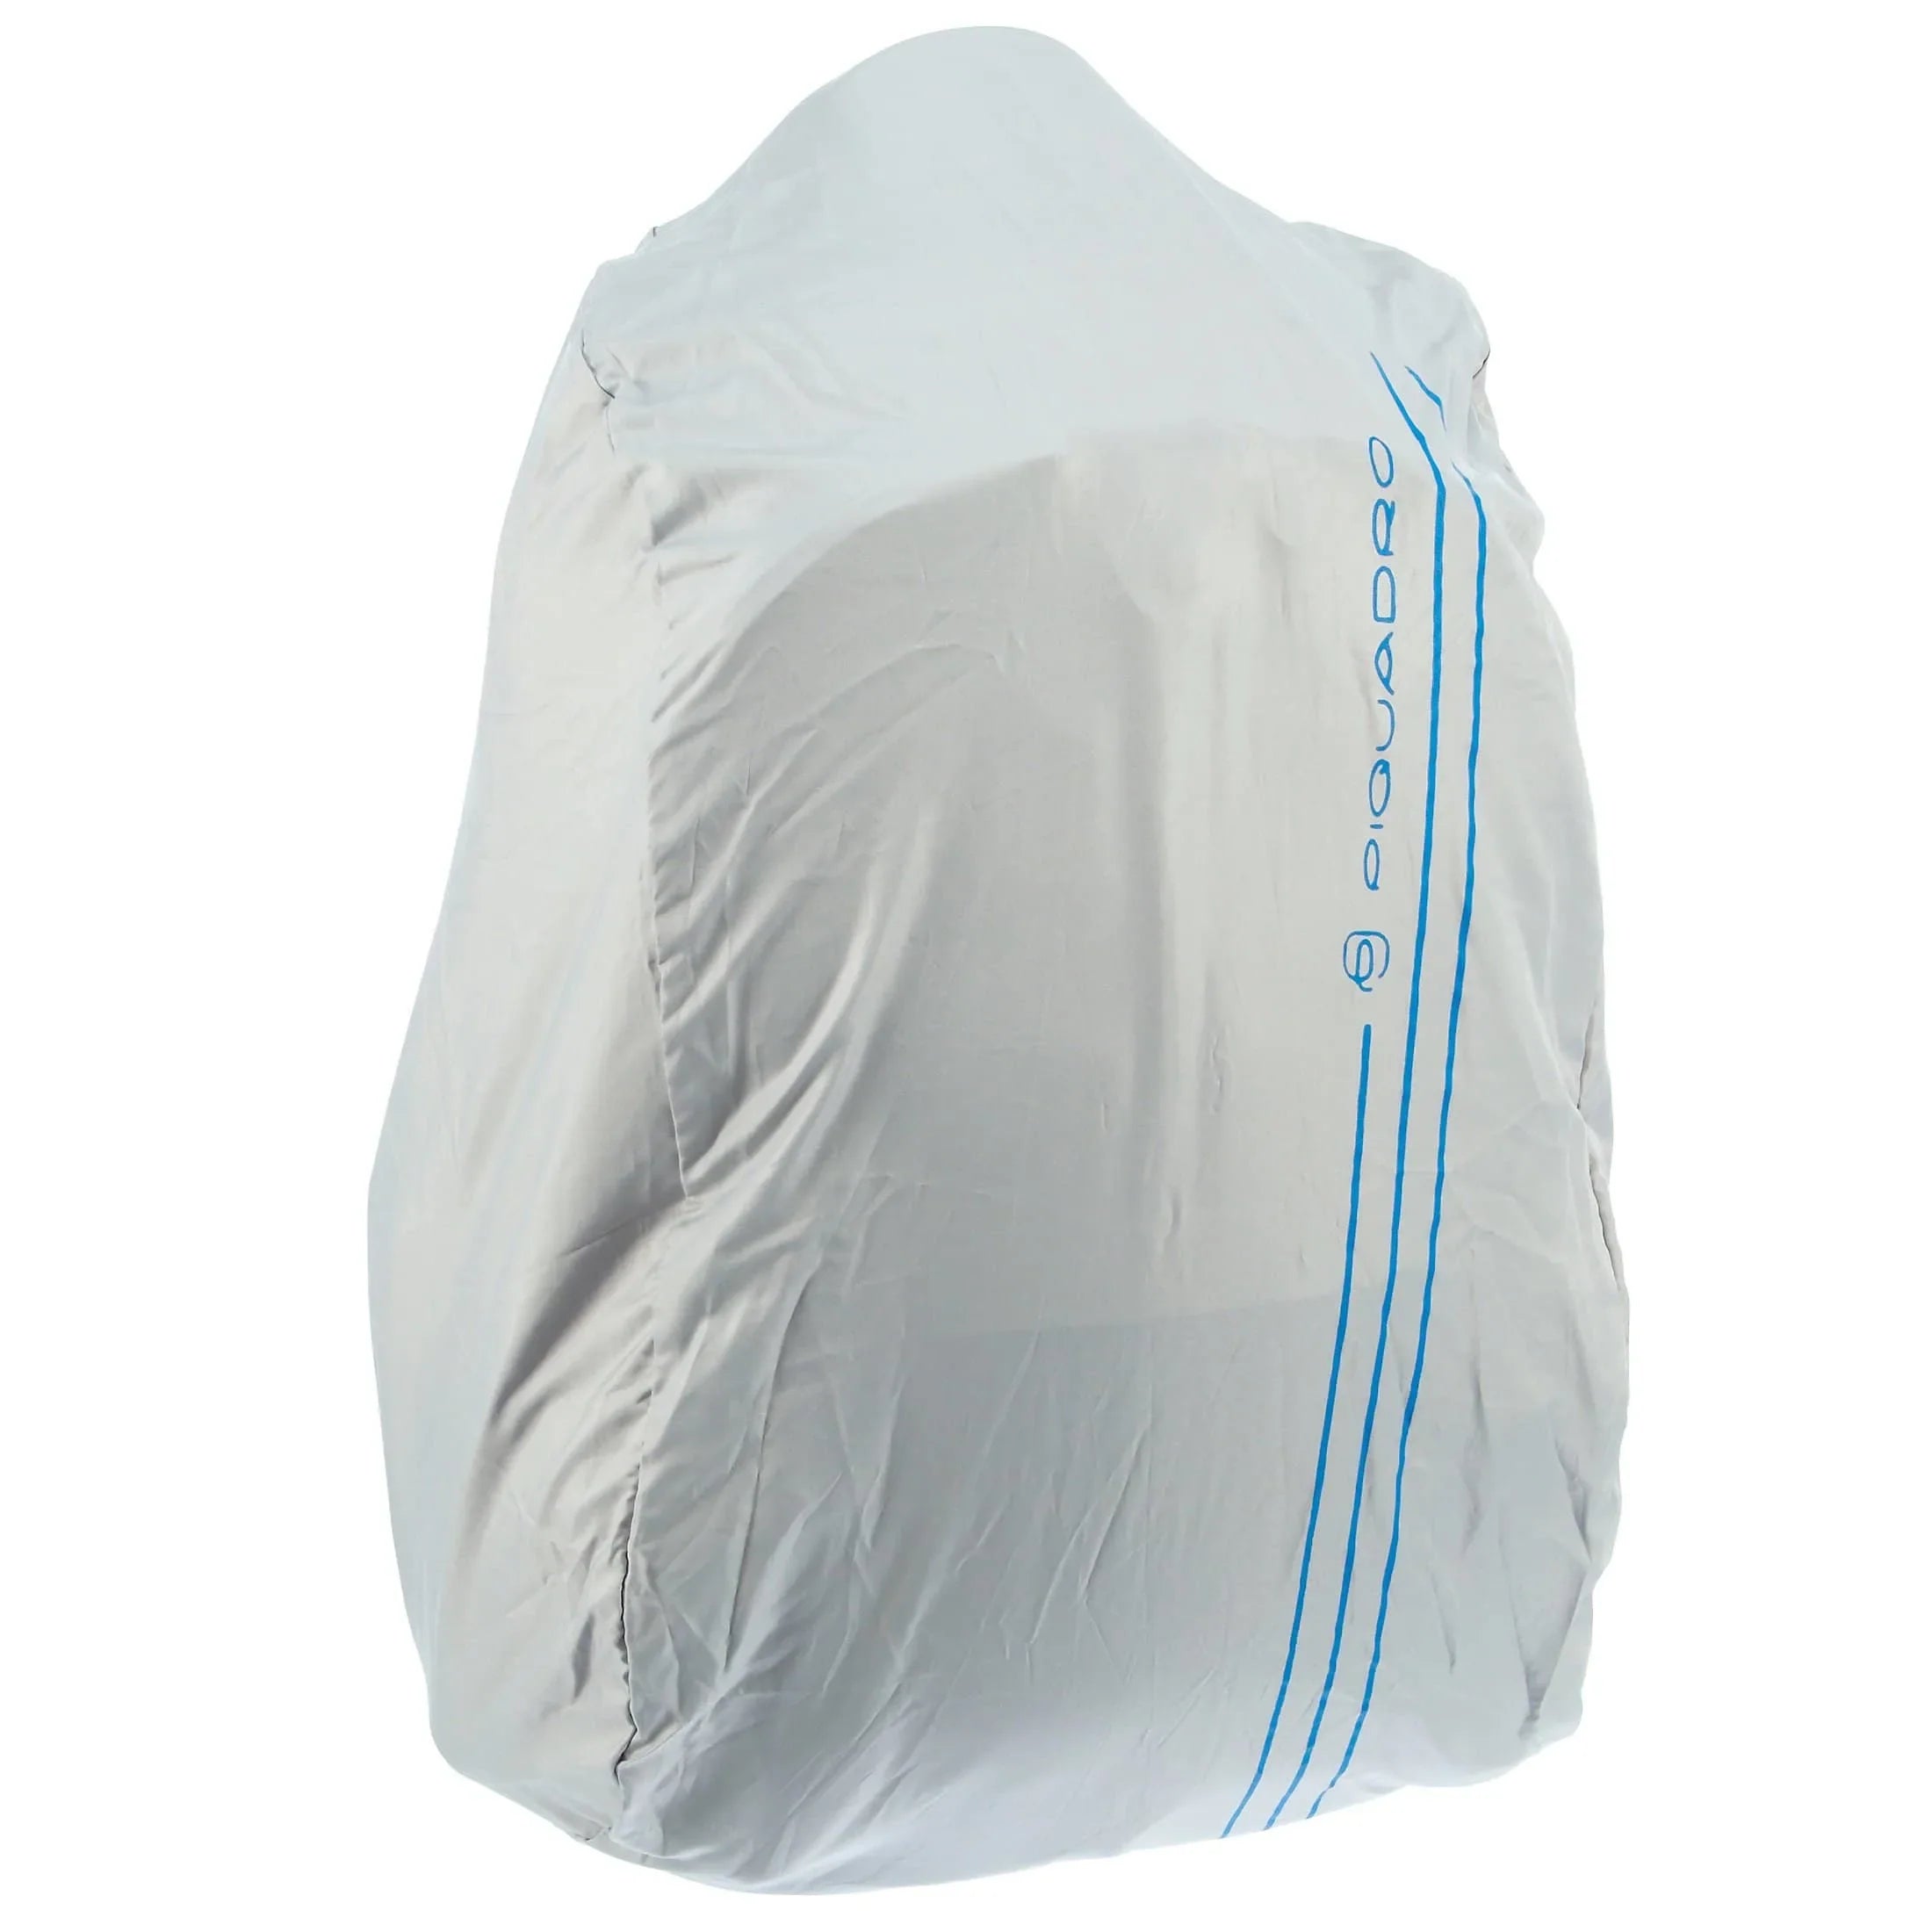 Piquadro Coleos sac à dos pour ordinateur portable 42 cm - bleu foncé/bleu clair